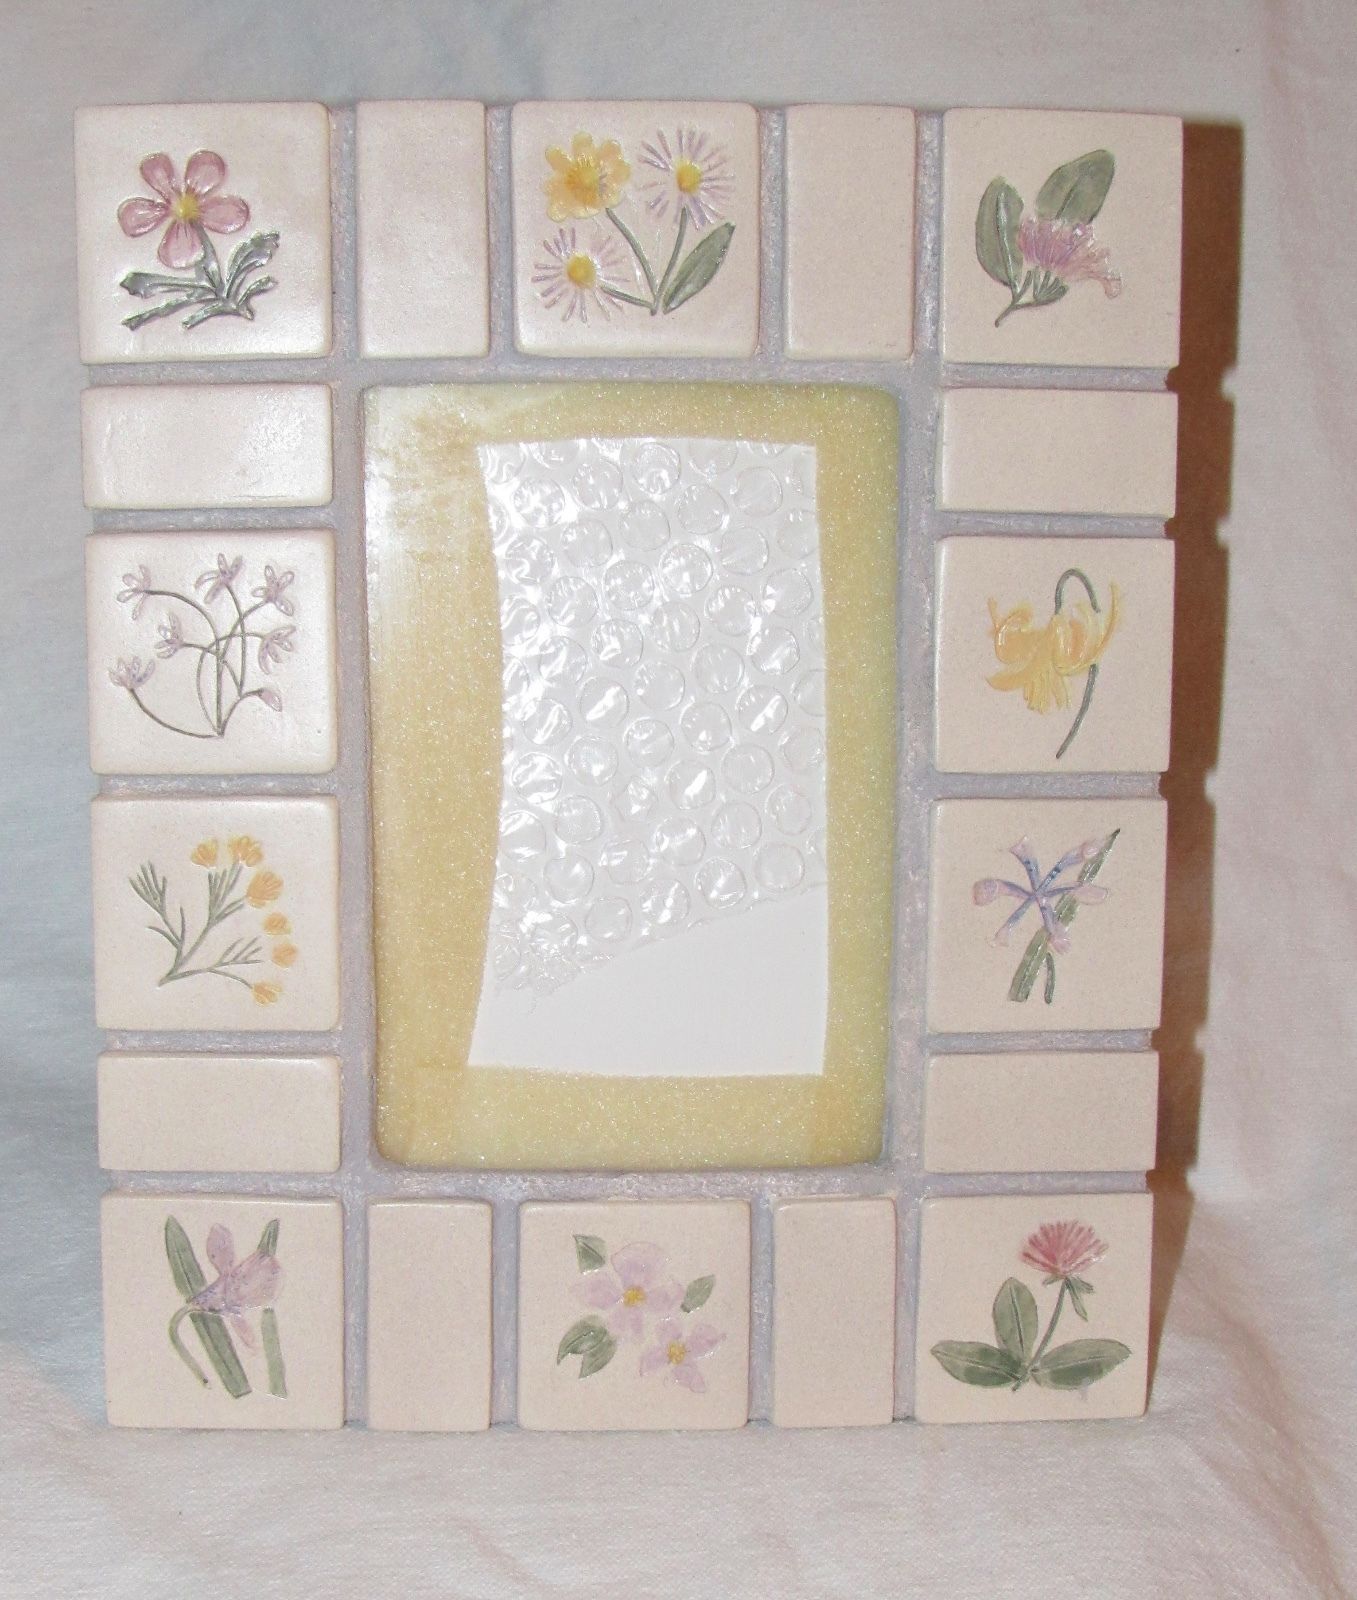 Malden Ceramic Frame with Handprinted Flowers - $15.99